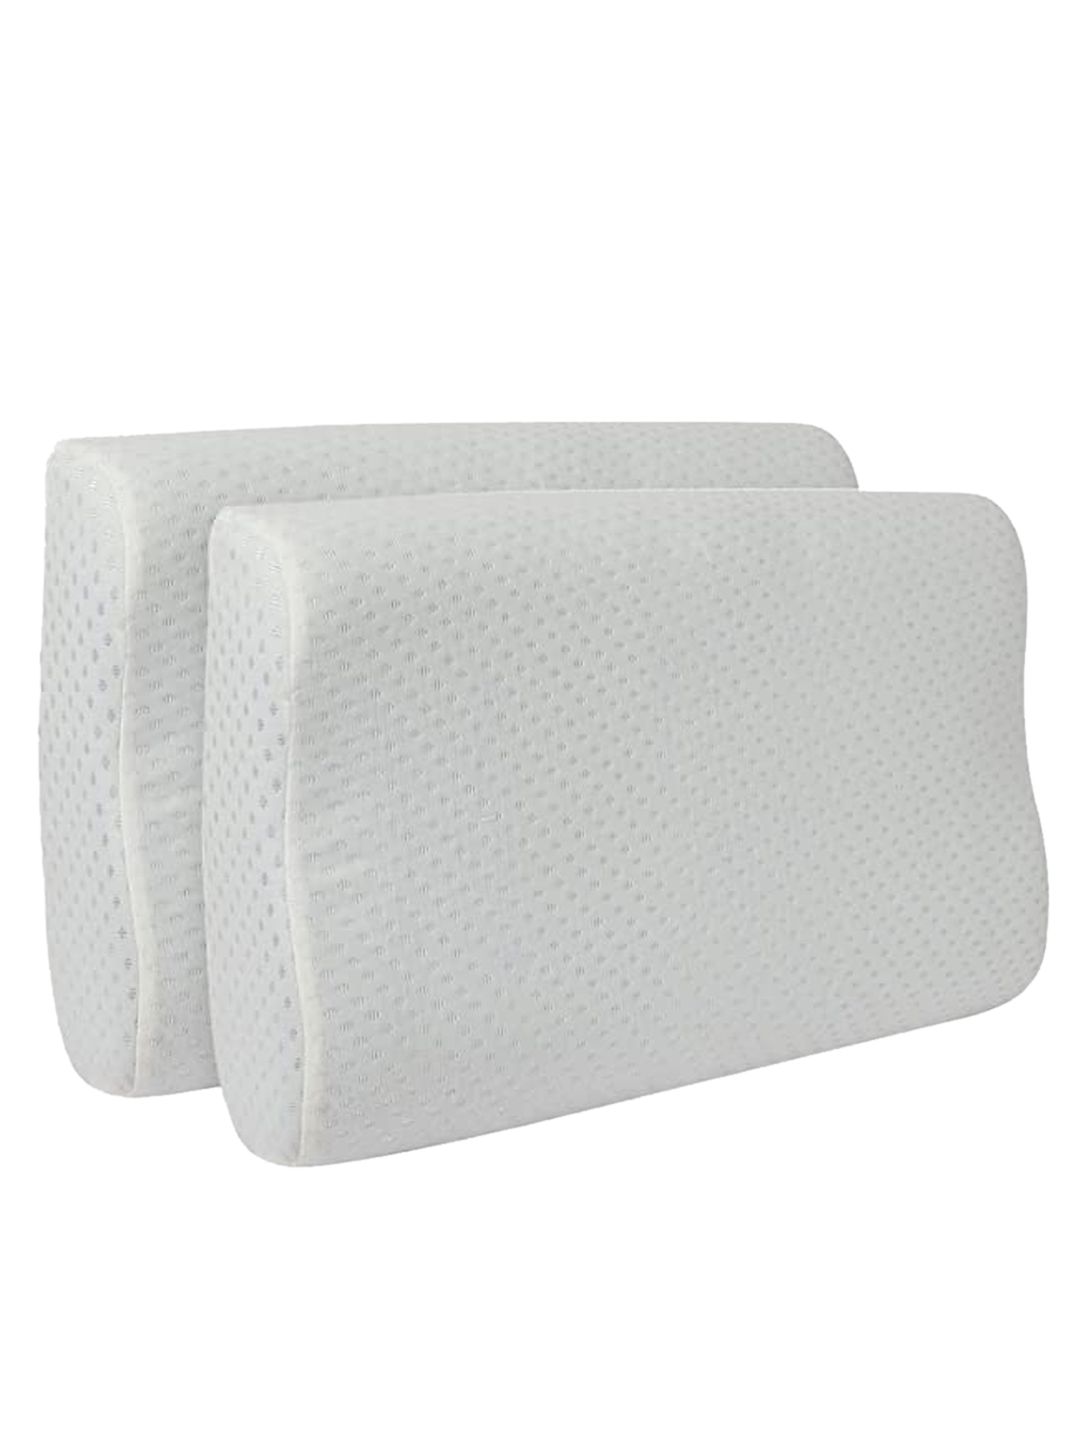 Sleepsia Set of 2 White Solid Therapedic Pillow Price in India